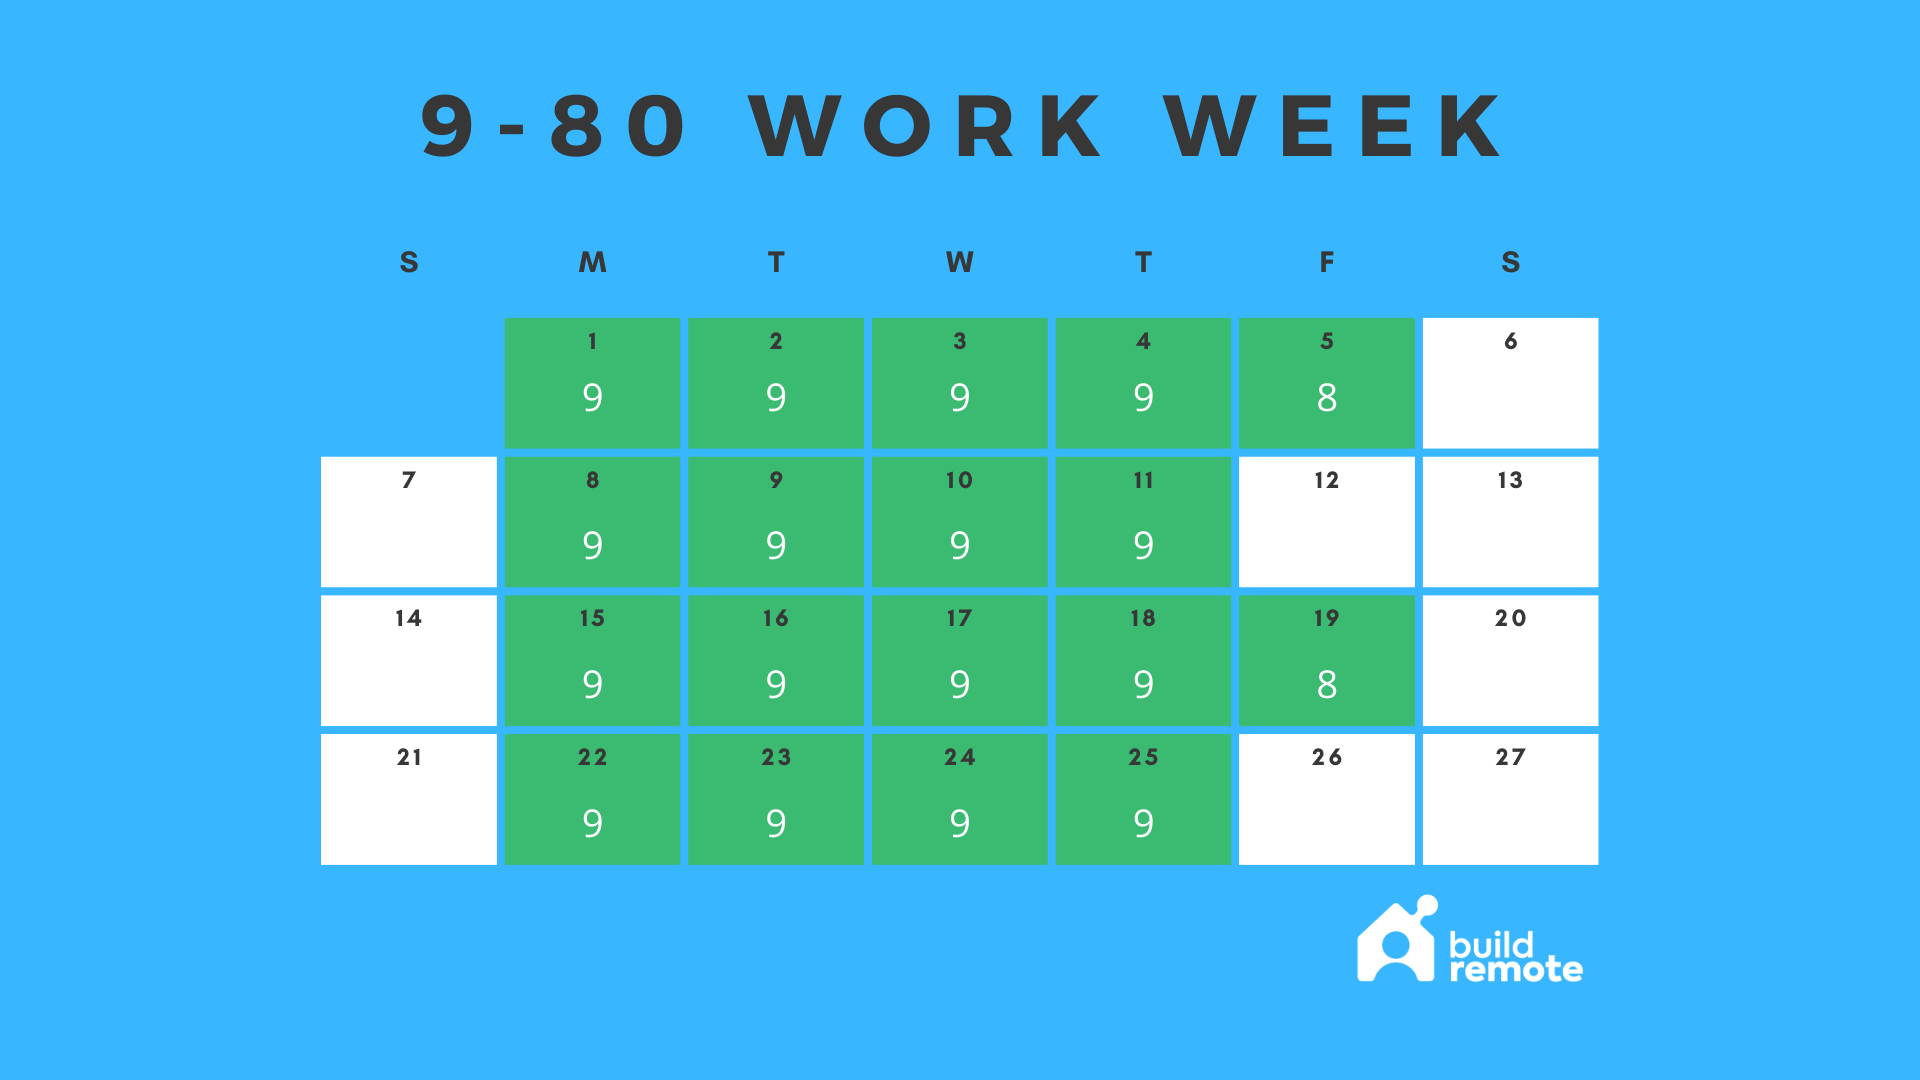 9-80 work week schedule template